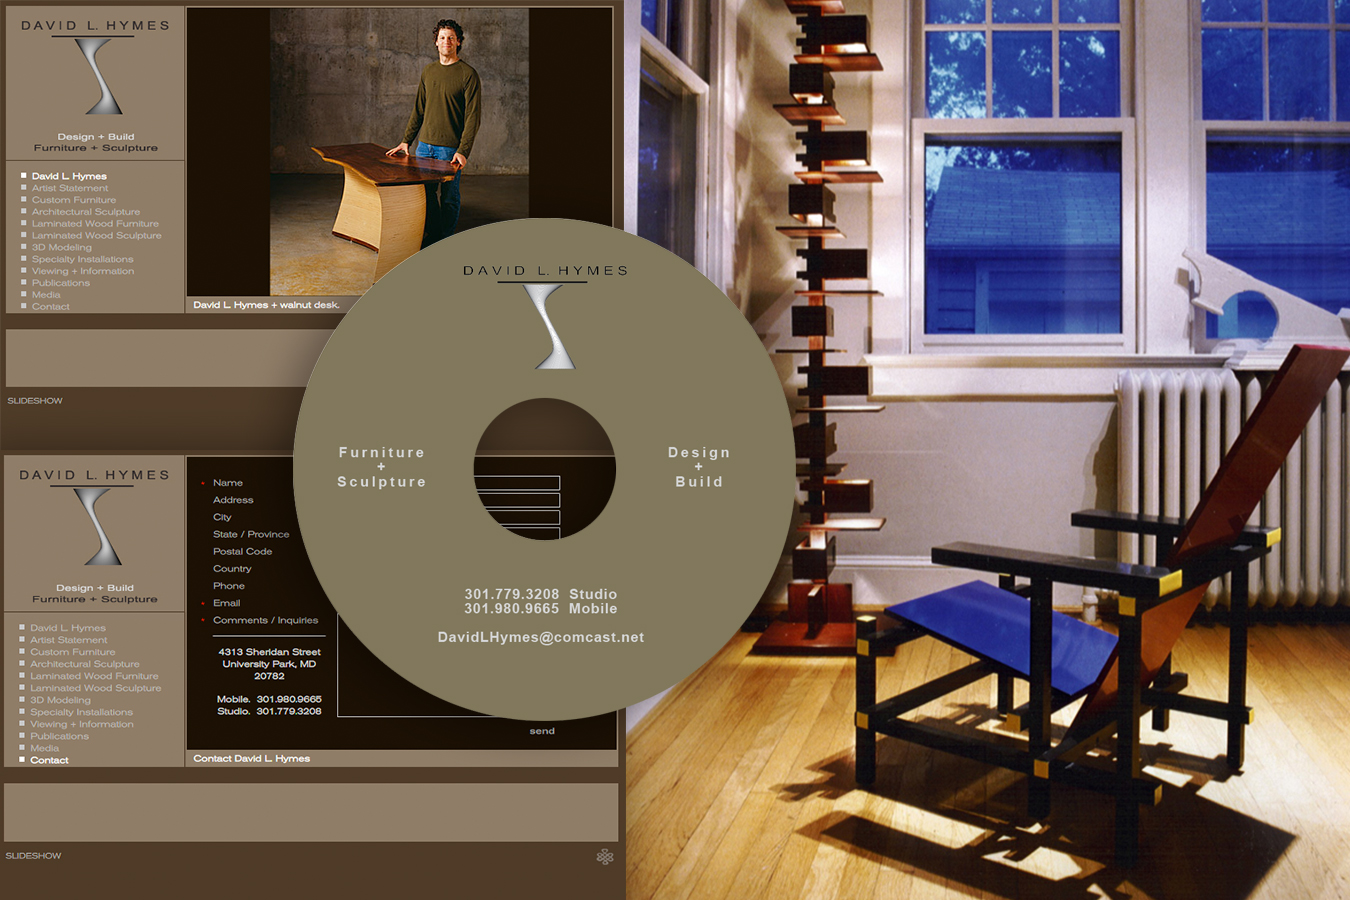 Hymes CD : CD delivered mini application of furniture portfolio 